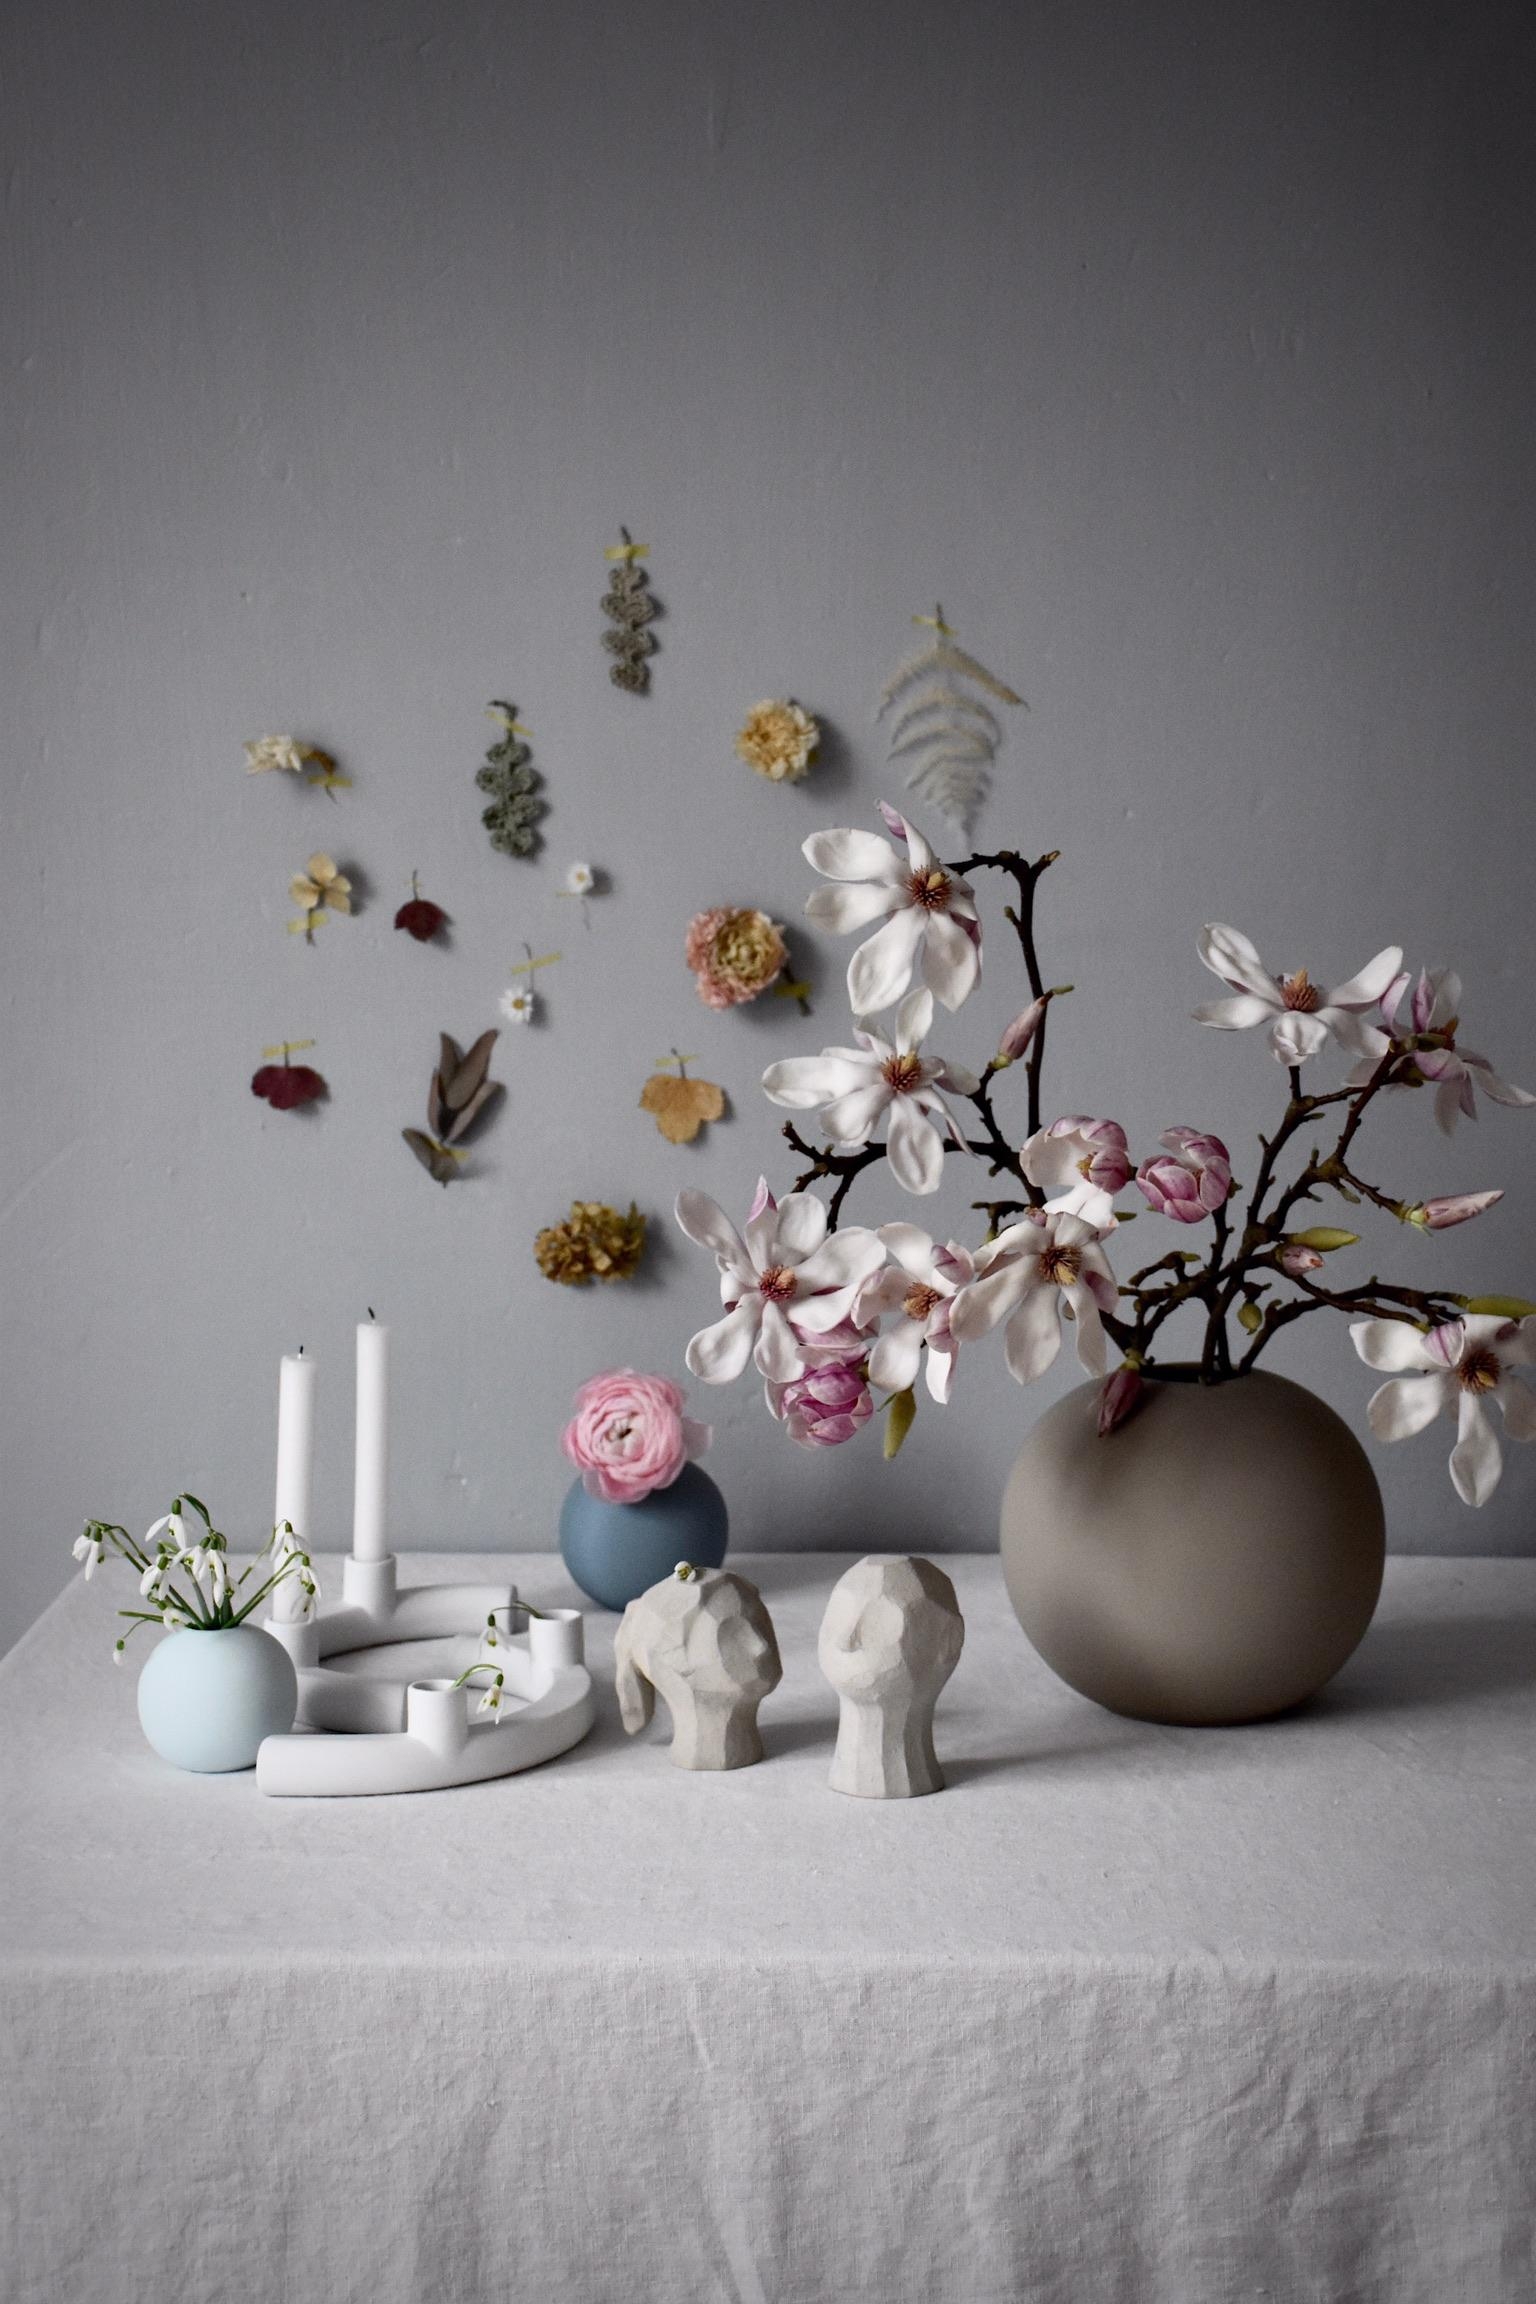 Lieblibgsblumen in Lieblingsvasen #cooee #vase #verlosung #instagram